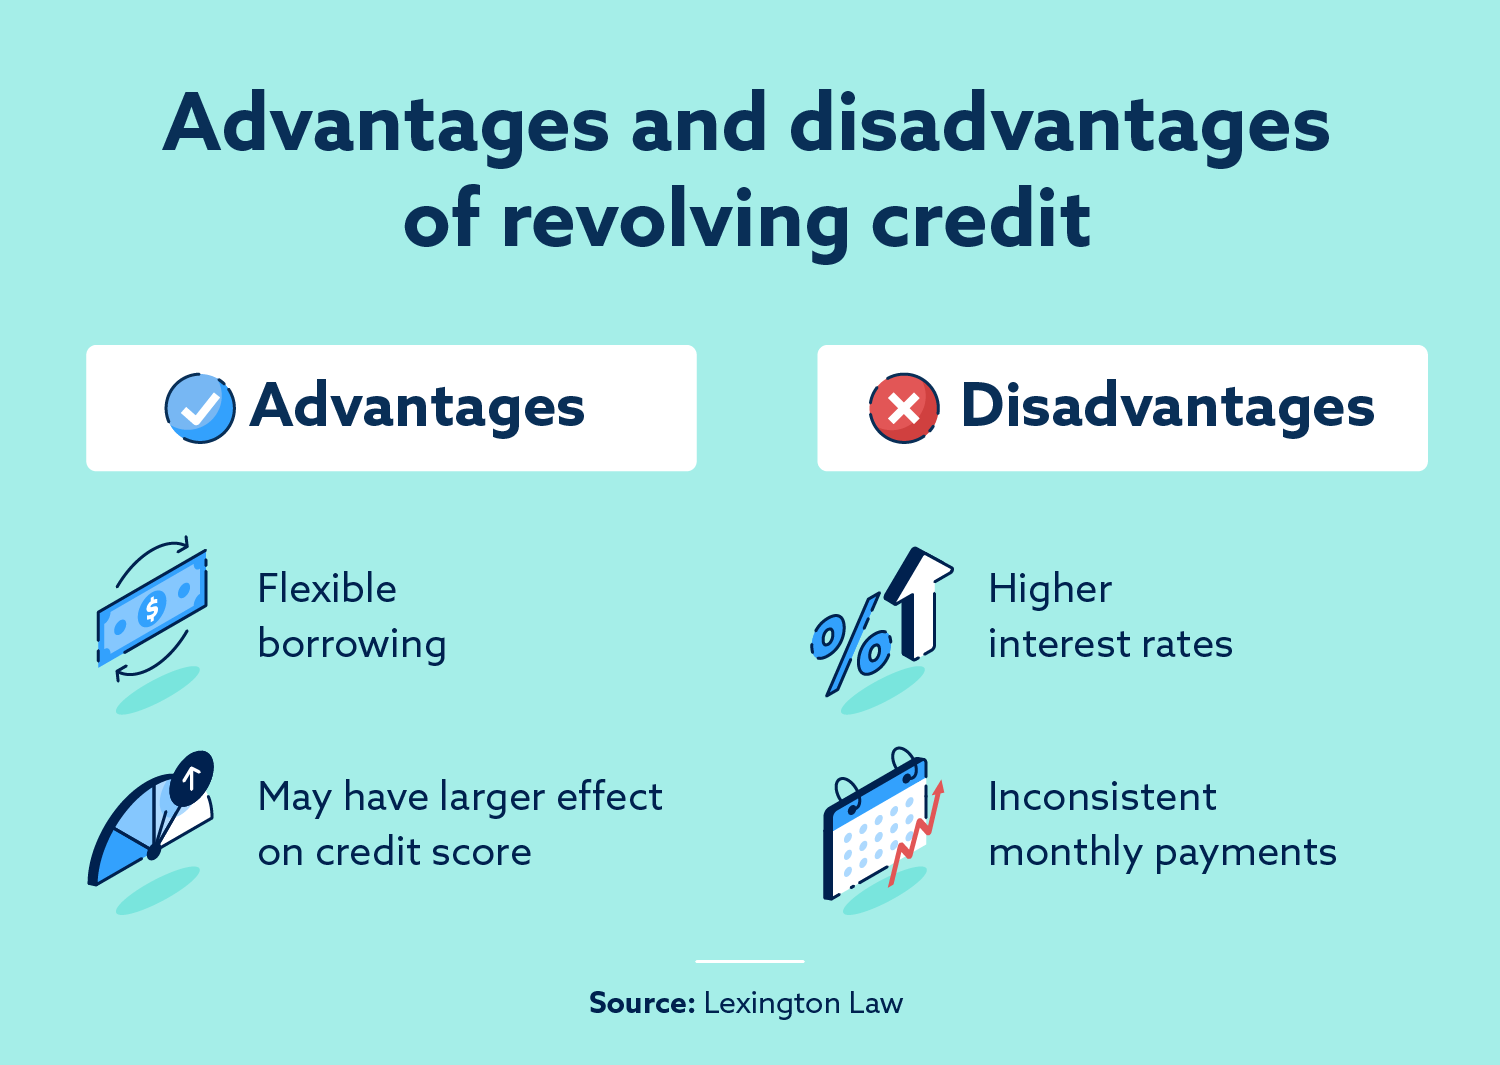 Advantages and disadvantages of revolving credit.